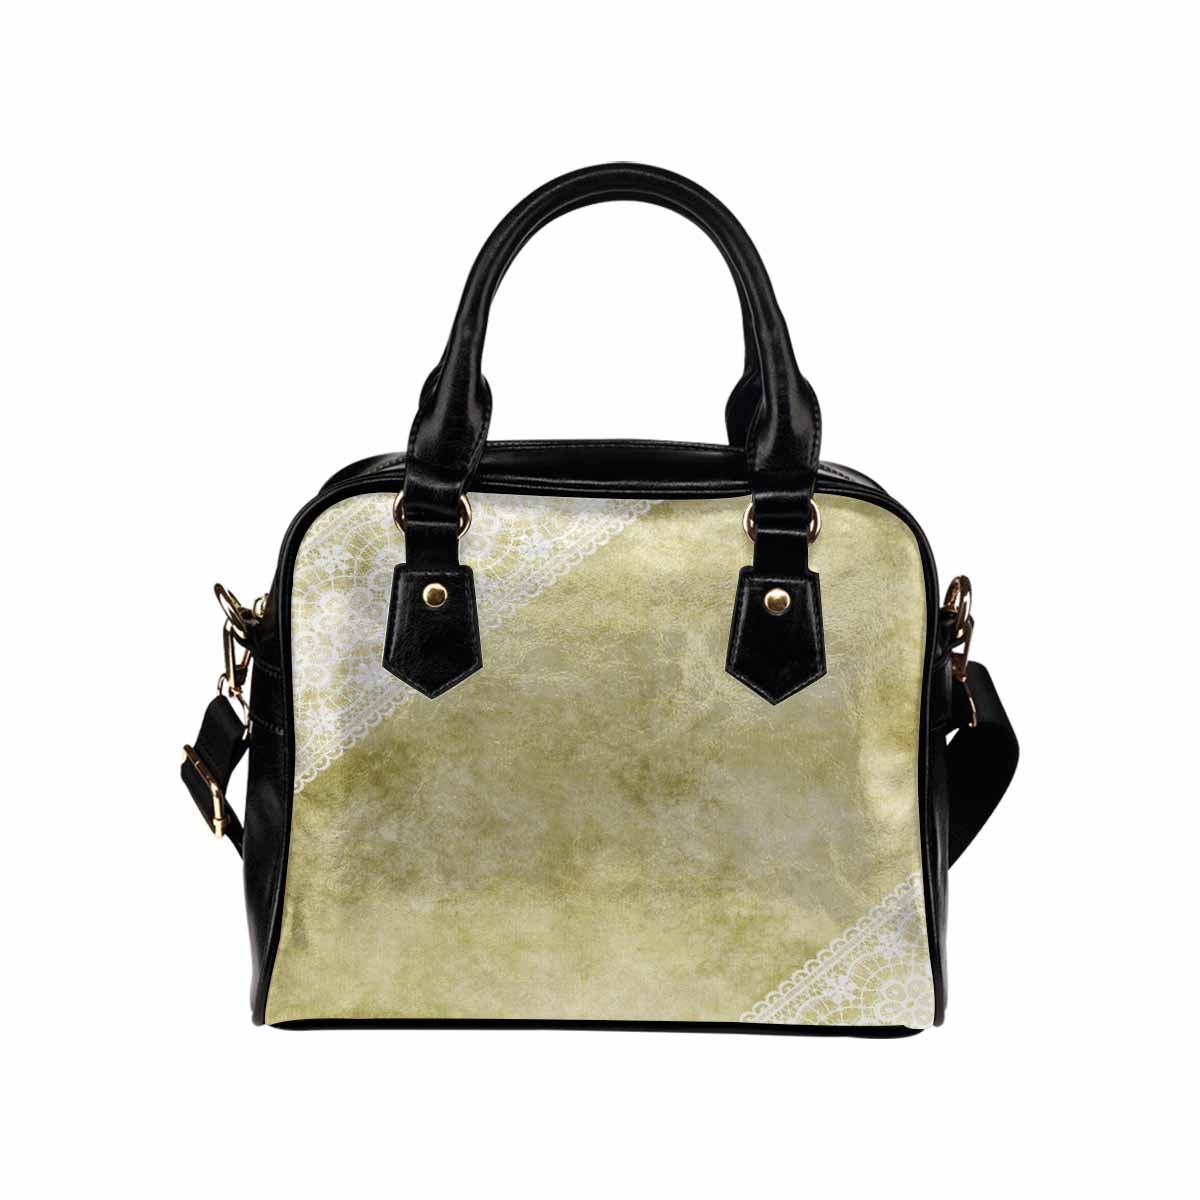 Victorian lace print, cute handbag, Mod 19163453, design 43